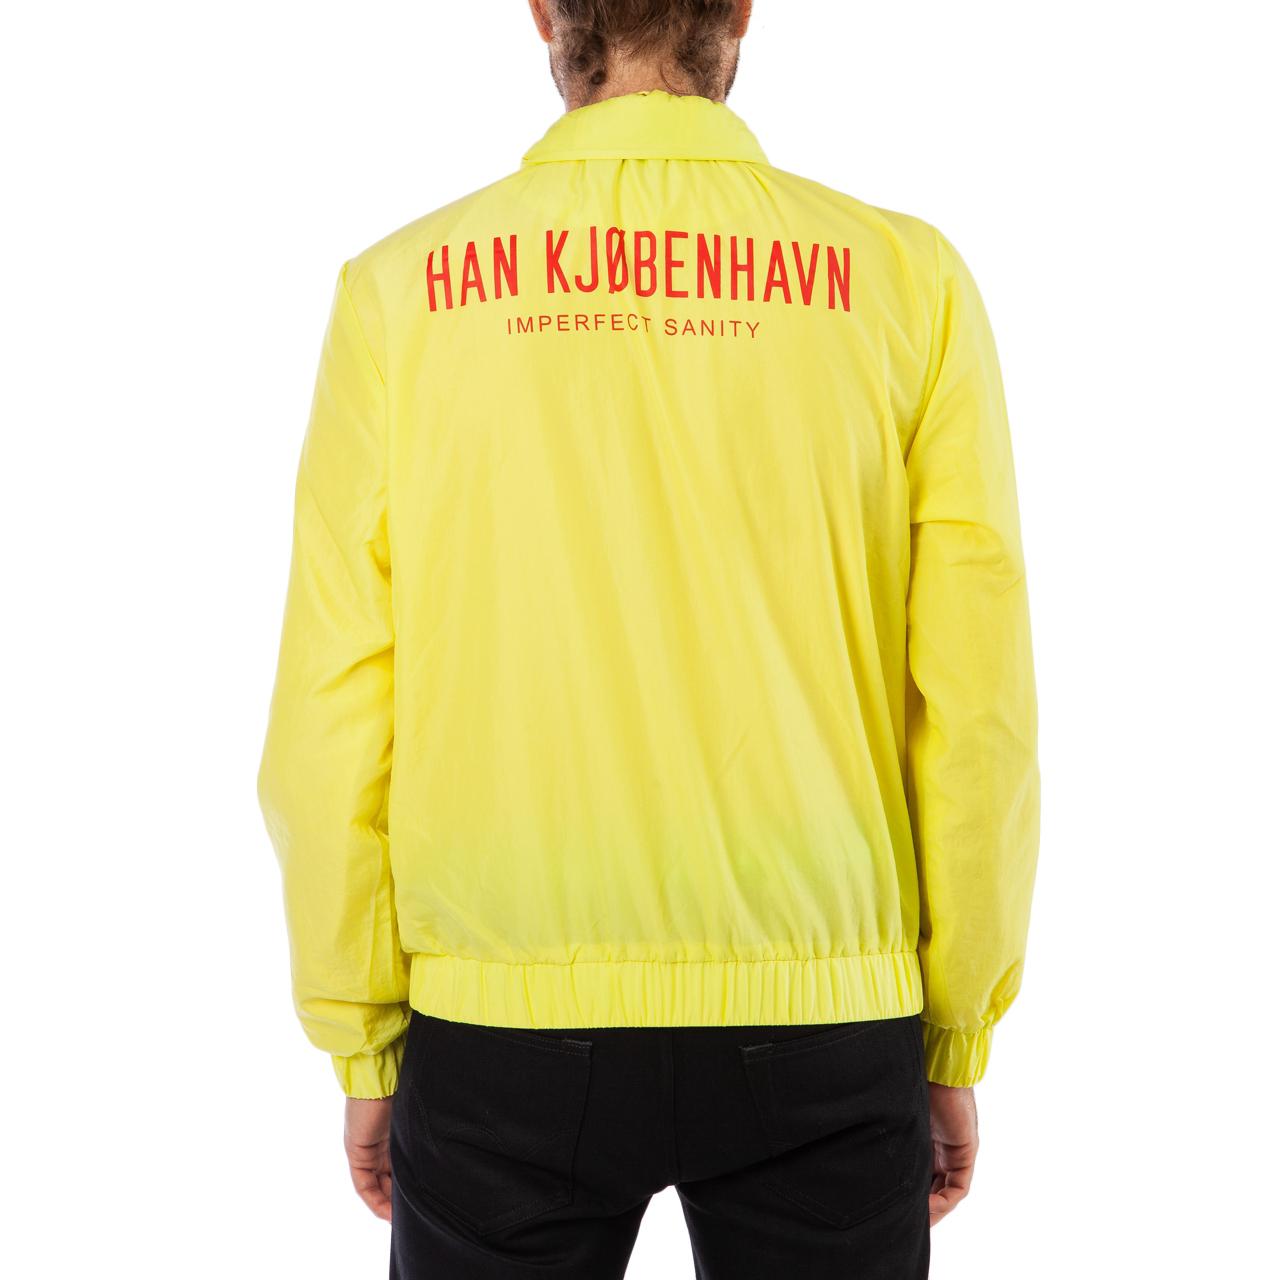 Han Kjobenhavn Track Top in Yellow for Men - Lyst